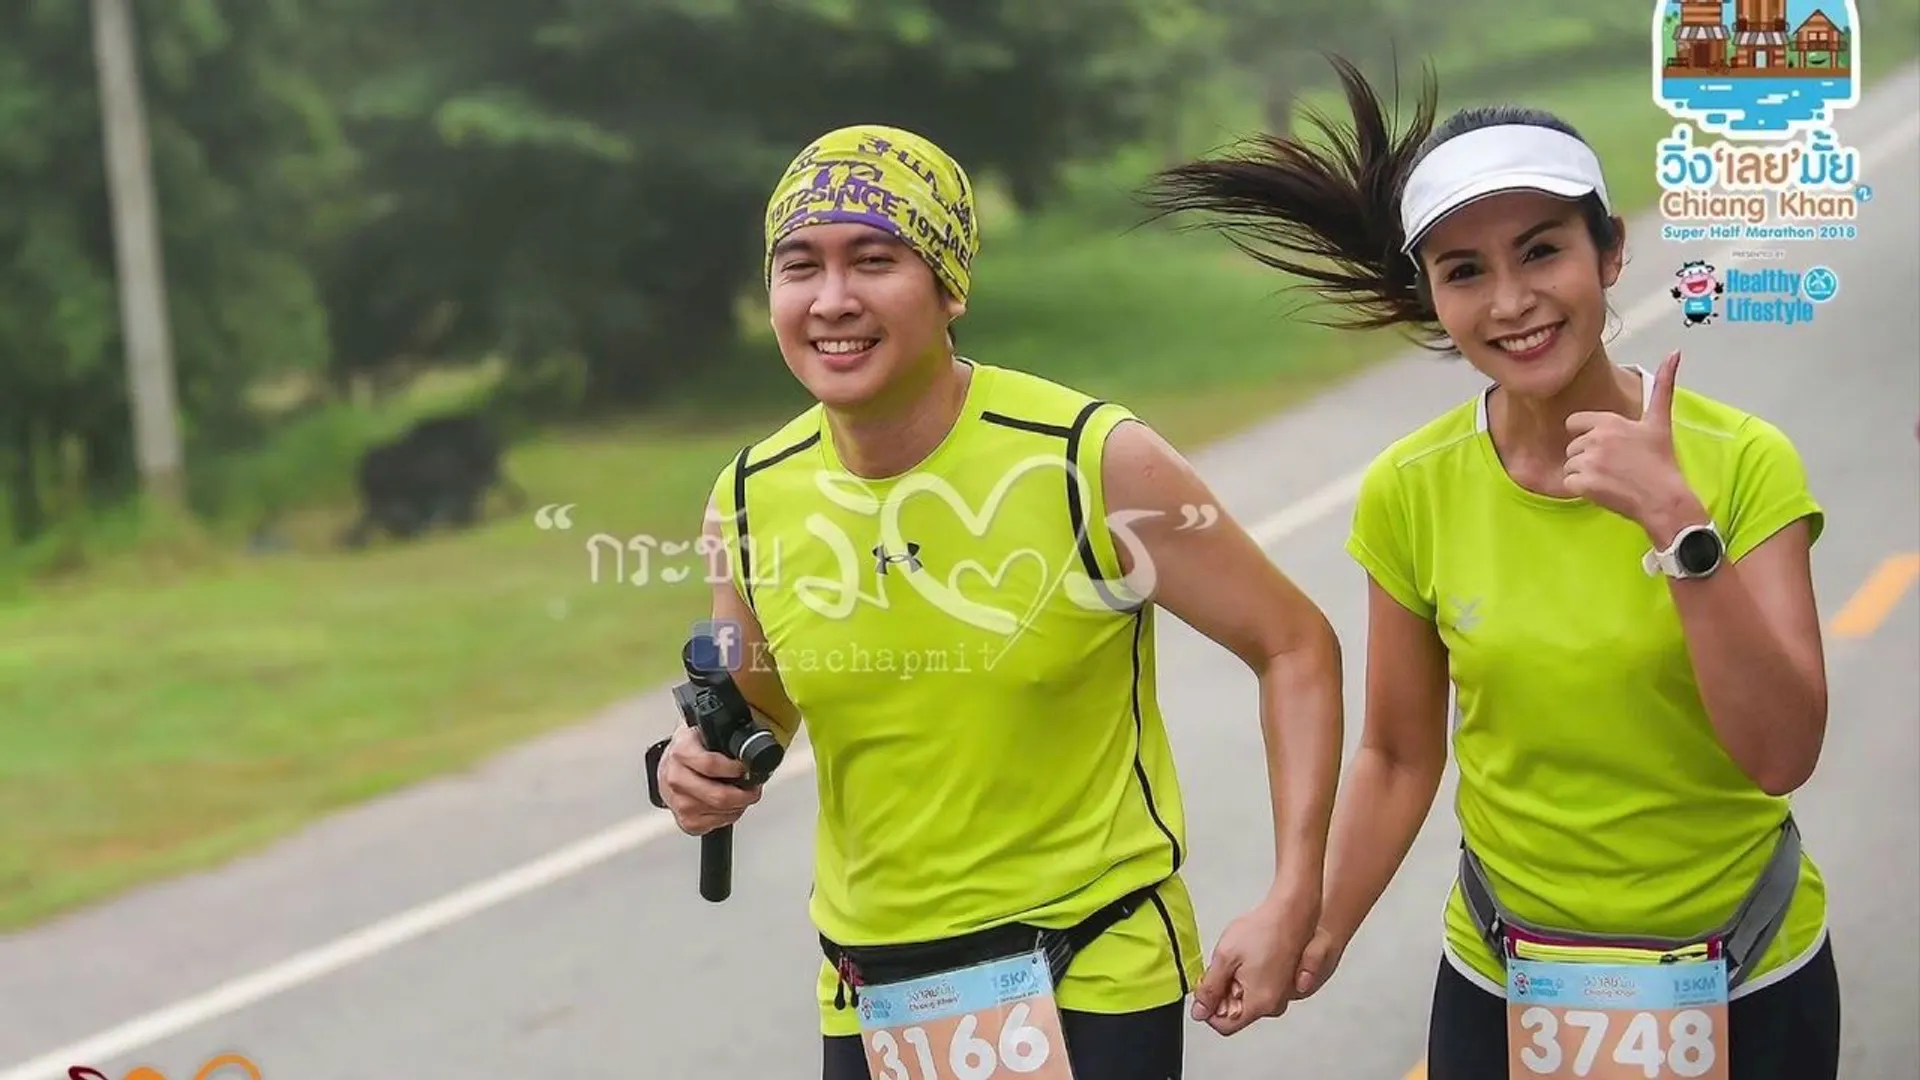 Chiangkhan Super Half Marathon